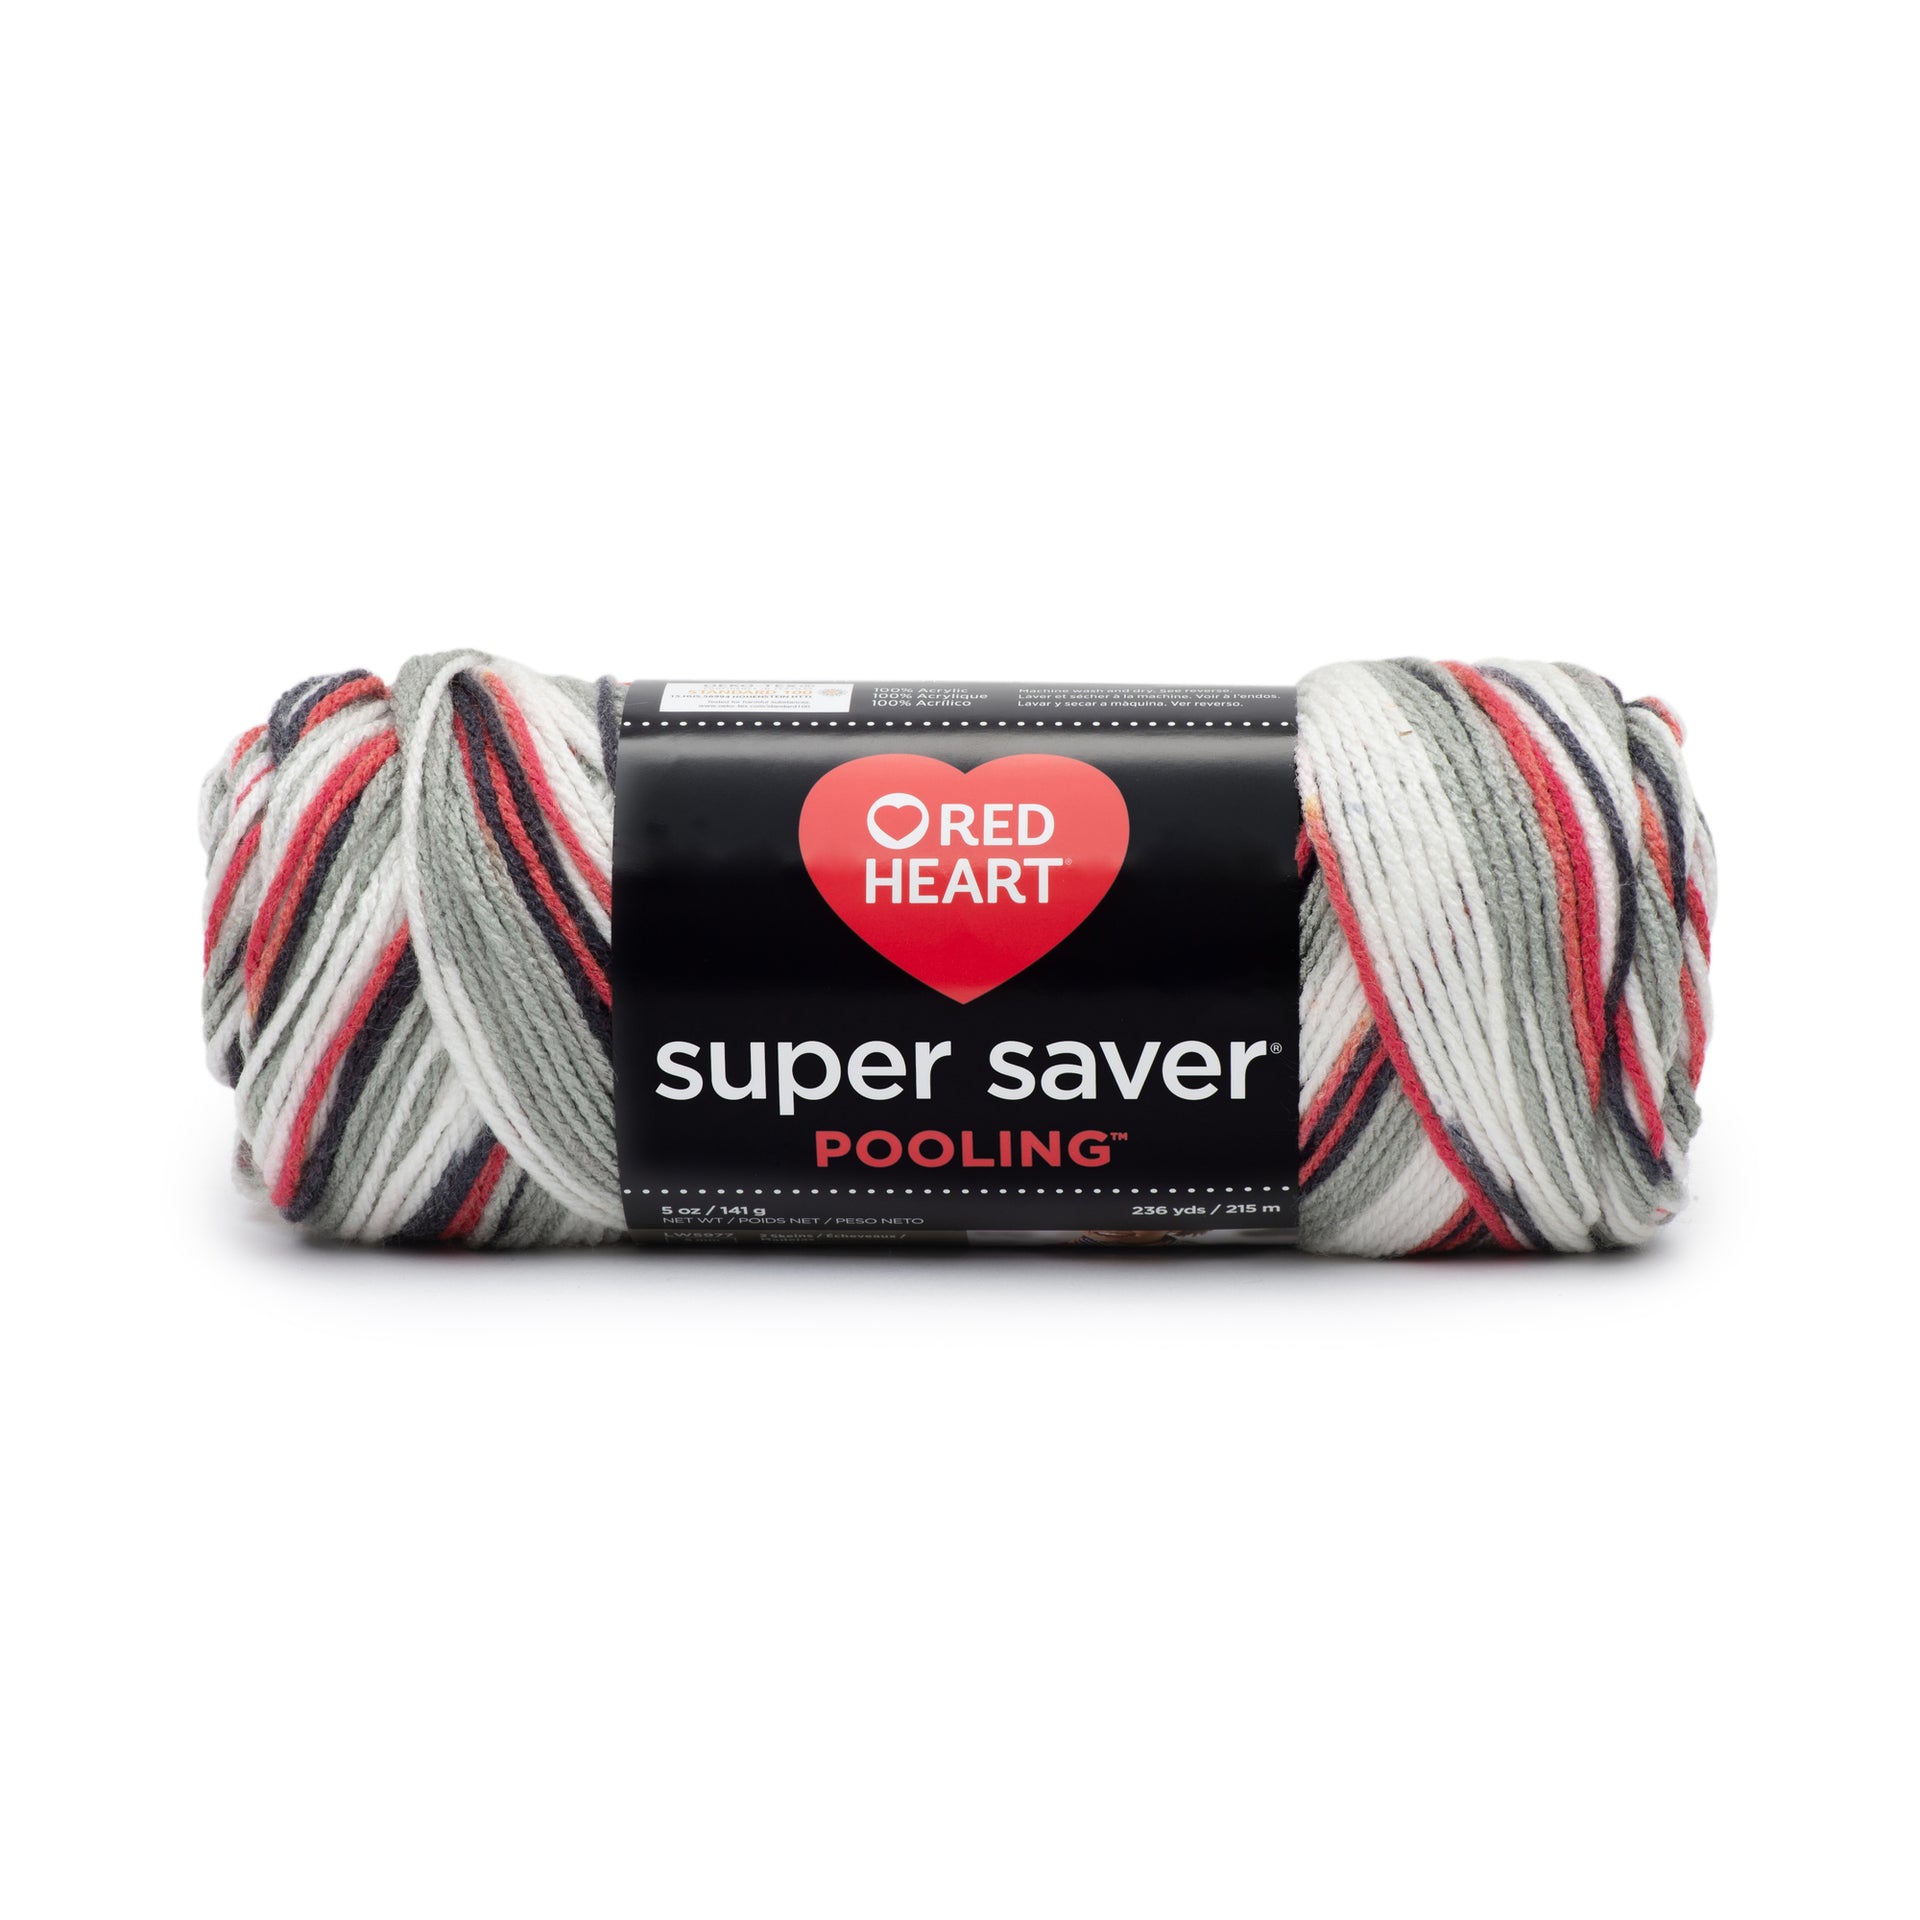 Red Heart Super Saver Jumbo Yarn, Soft White 2 Count (Pack of 1)